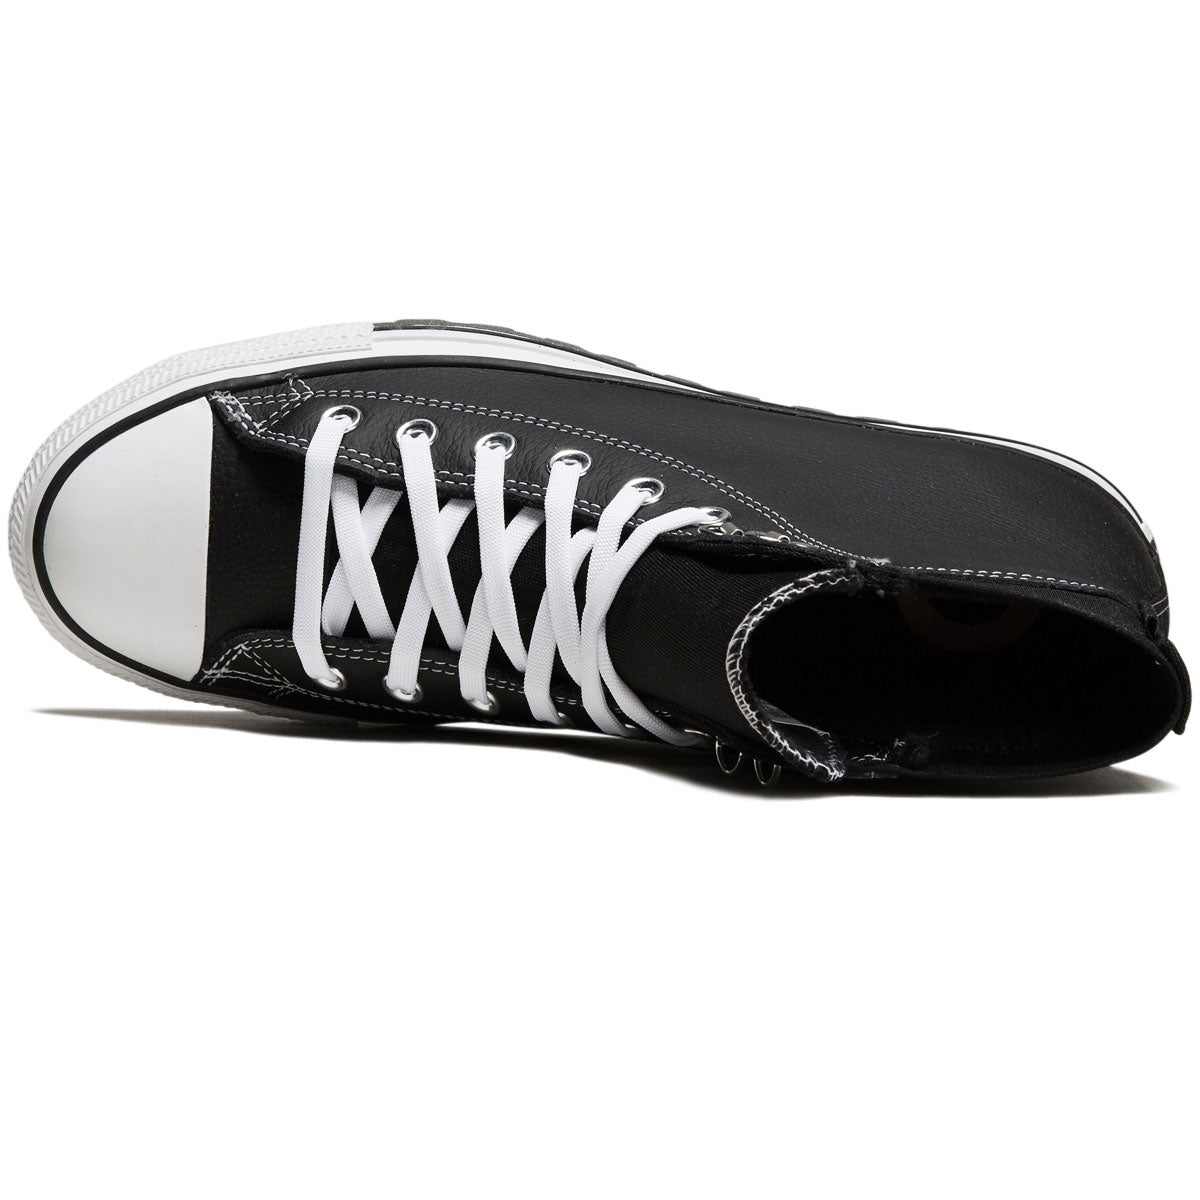 Converse Ctas City Trek Wp Hi Shoes - Black/White/Silver image 3